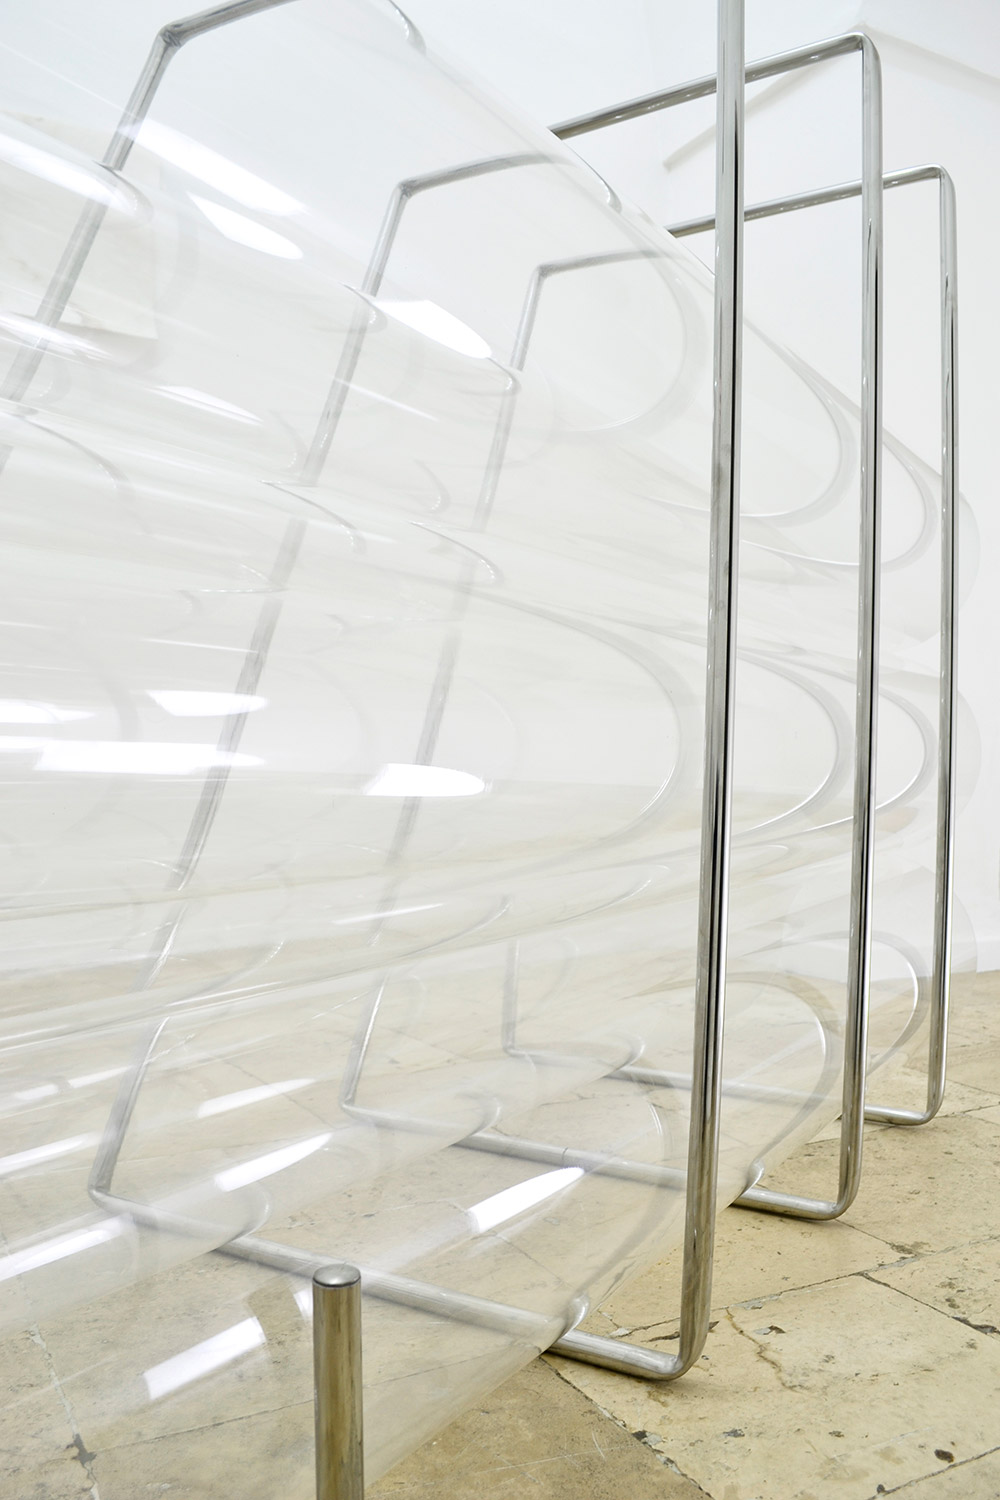 Antonio Trotta, Paquete especial, 1966-2016, steel, plexiglass, 330x145x110 cm (detail)